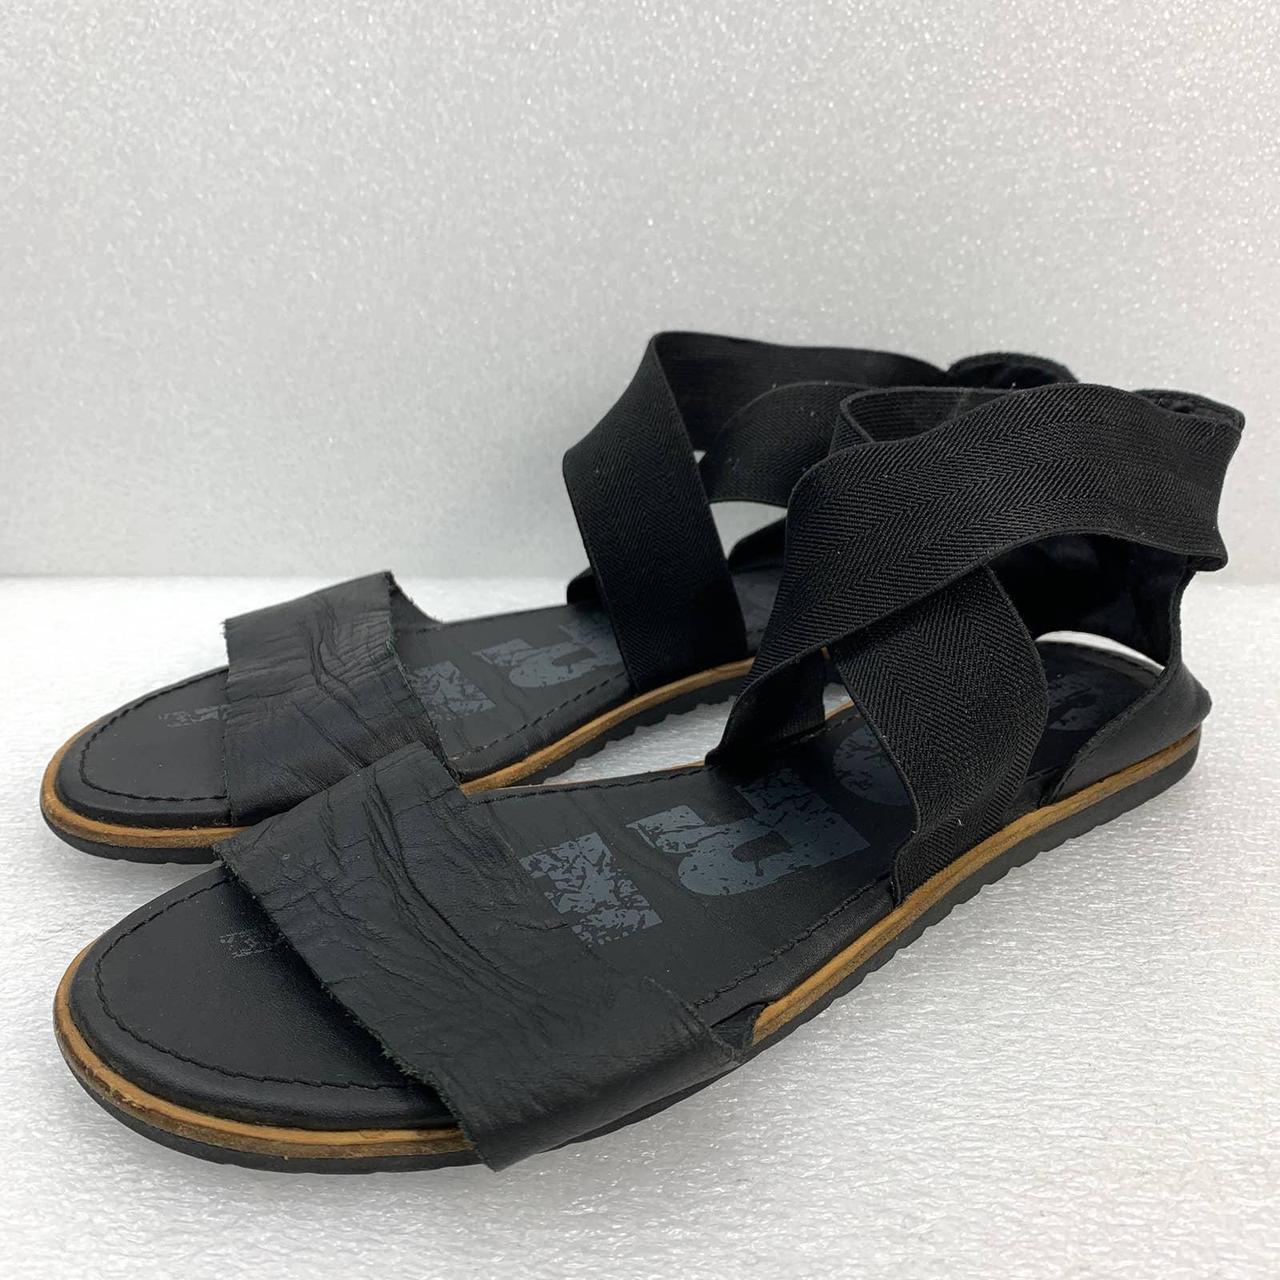 Sorel Women's Black and Tan Sandals (3)